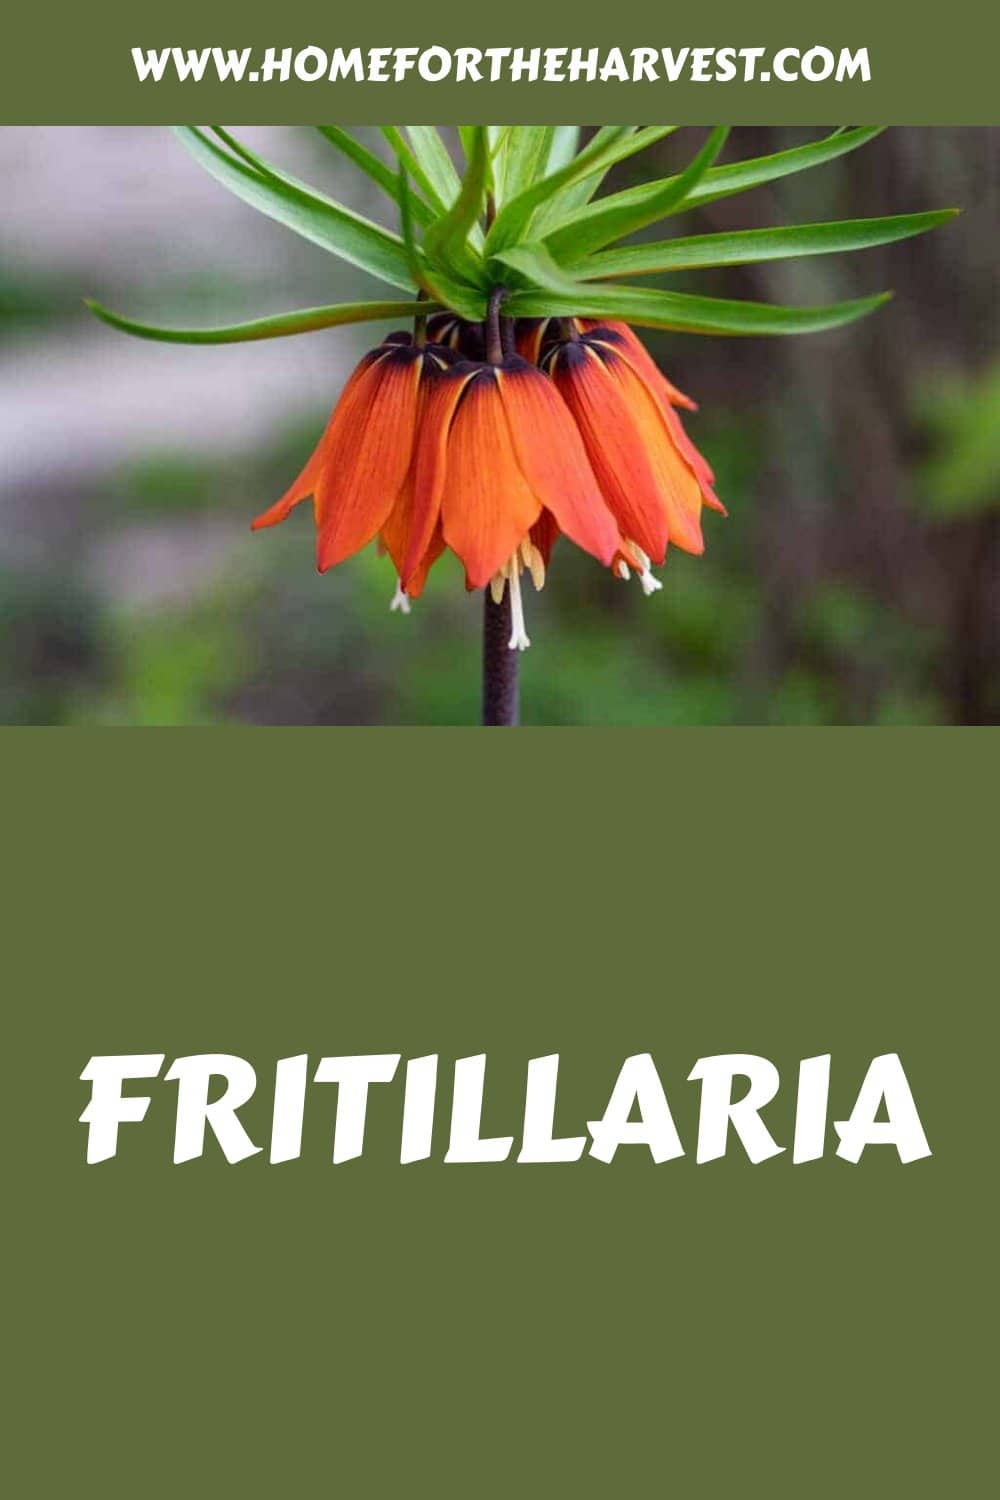 Fritillaria generated pin 22929